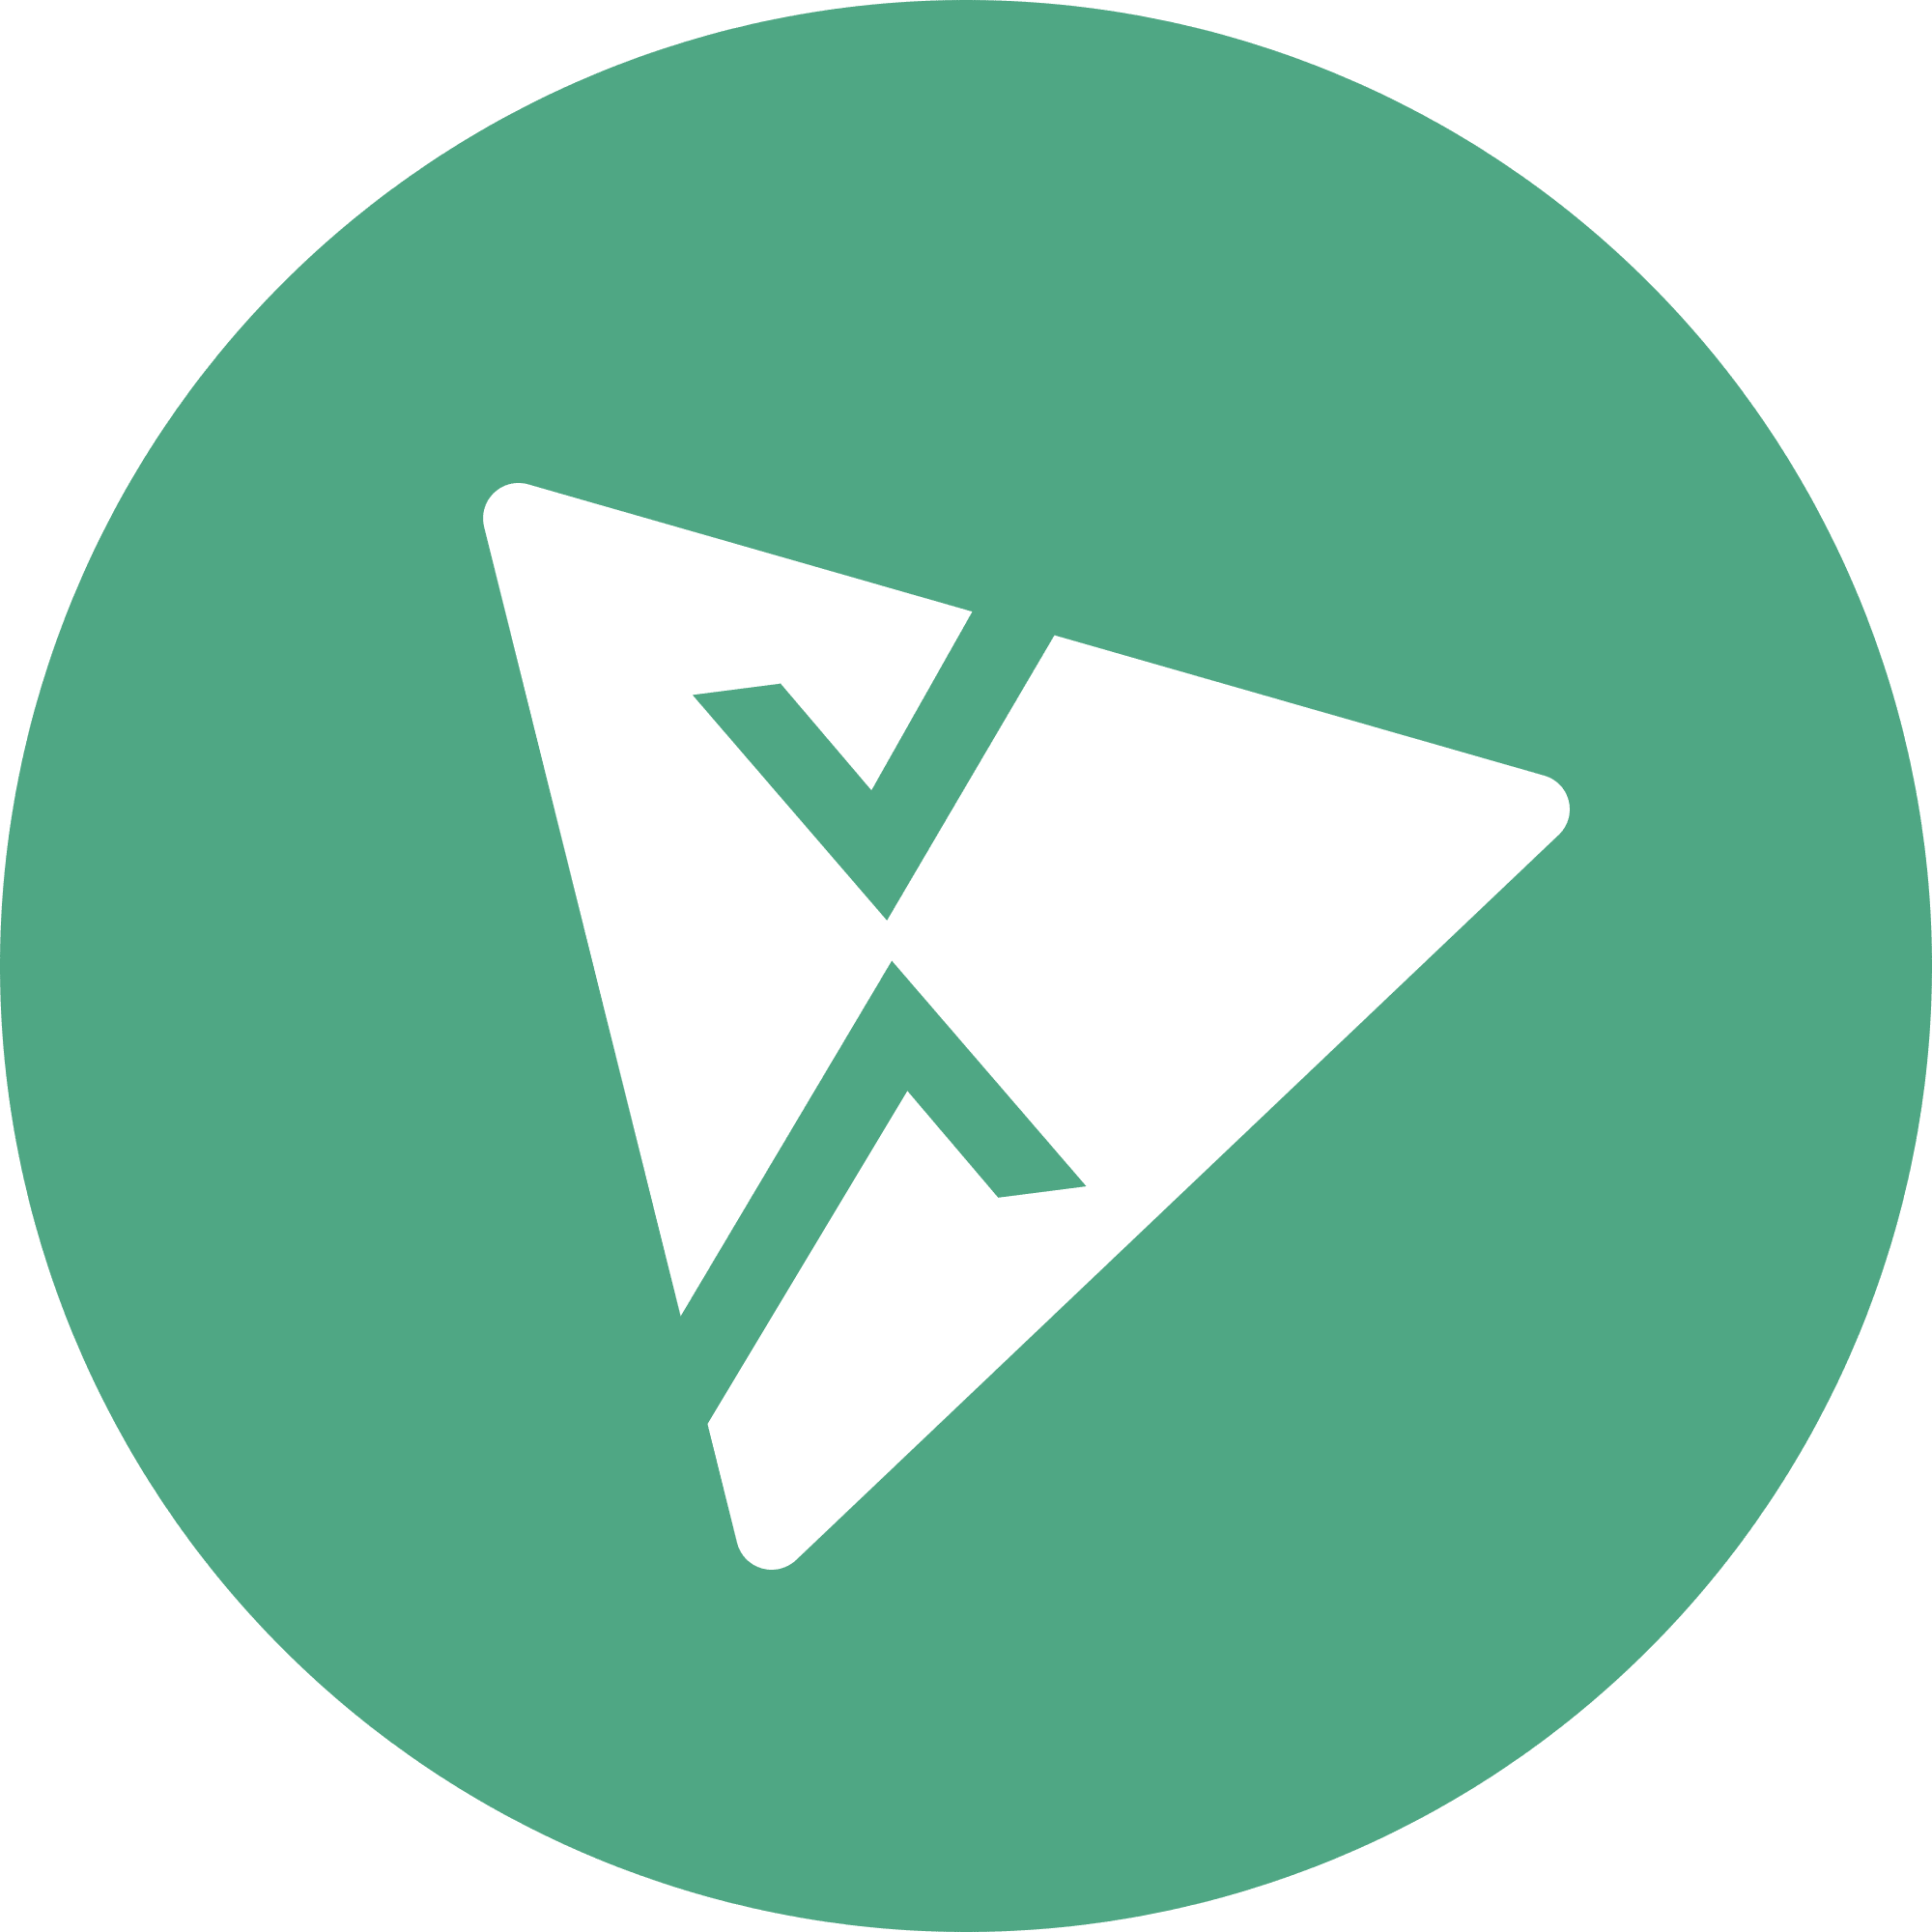 XPA logo in png format